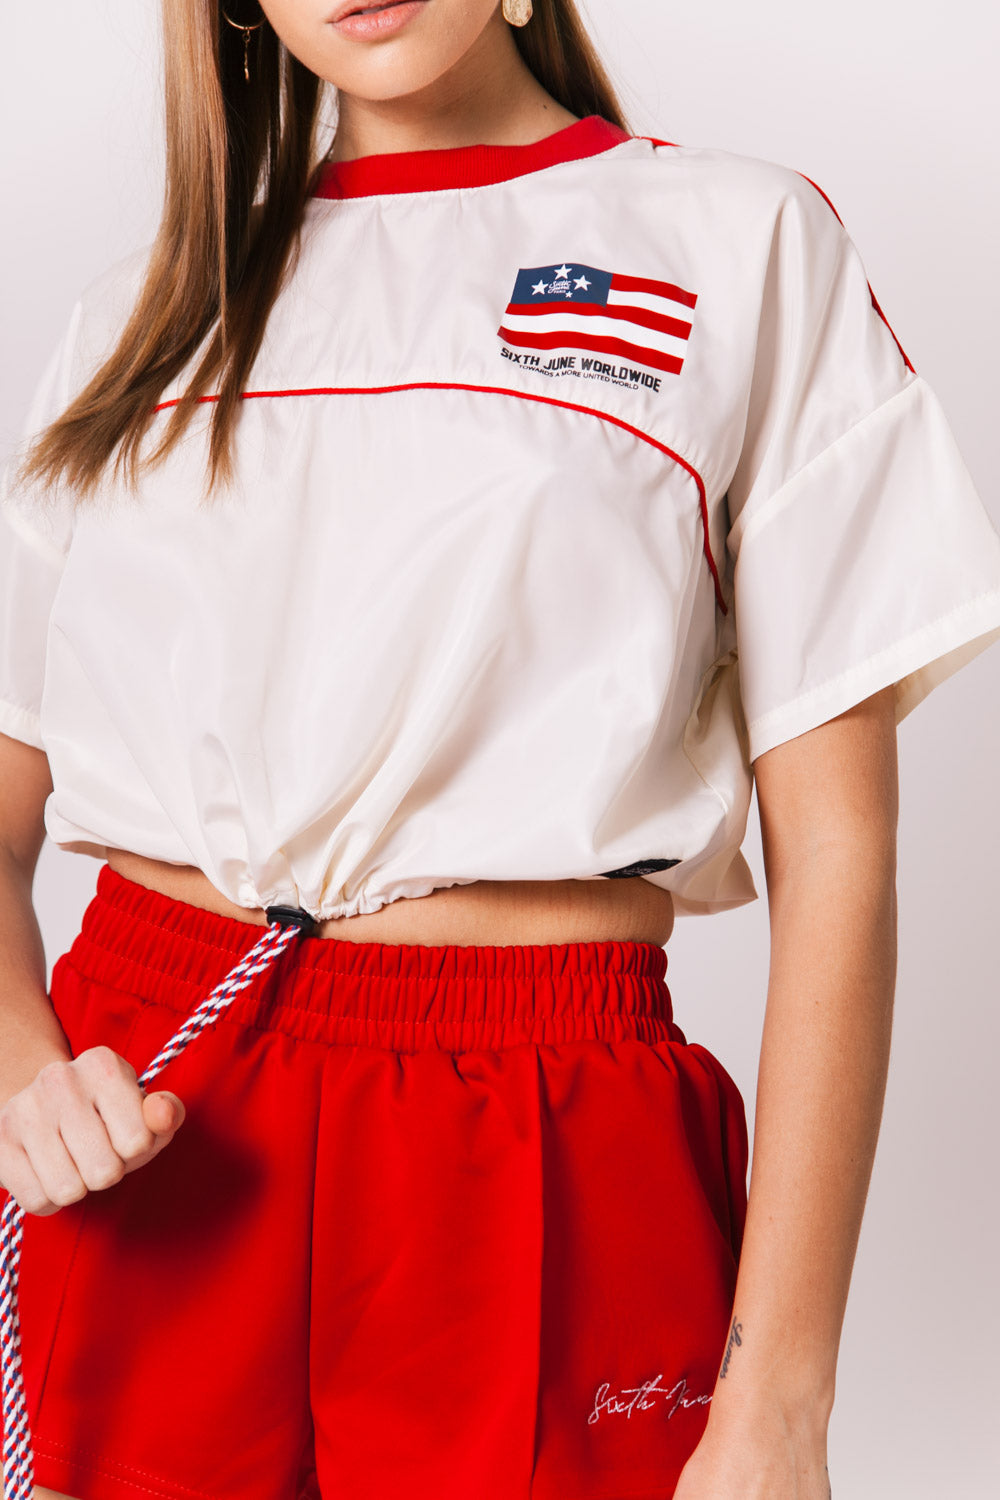 Sixth June - T-shirt crop top drapeau blanc rouge